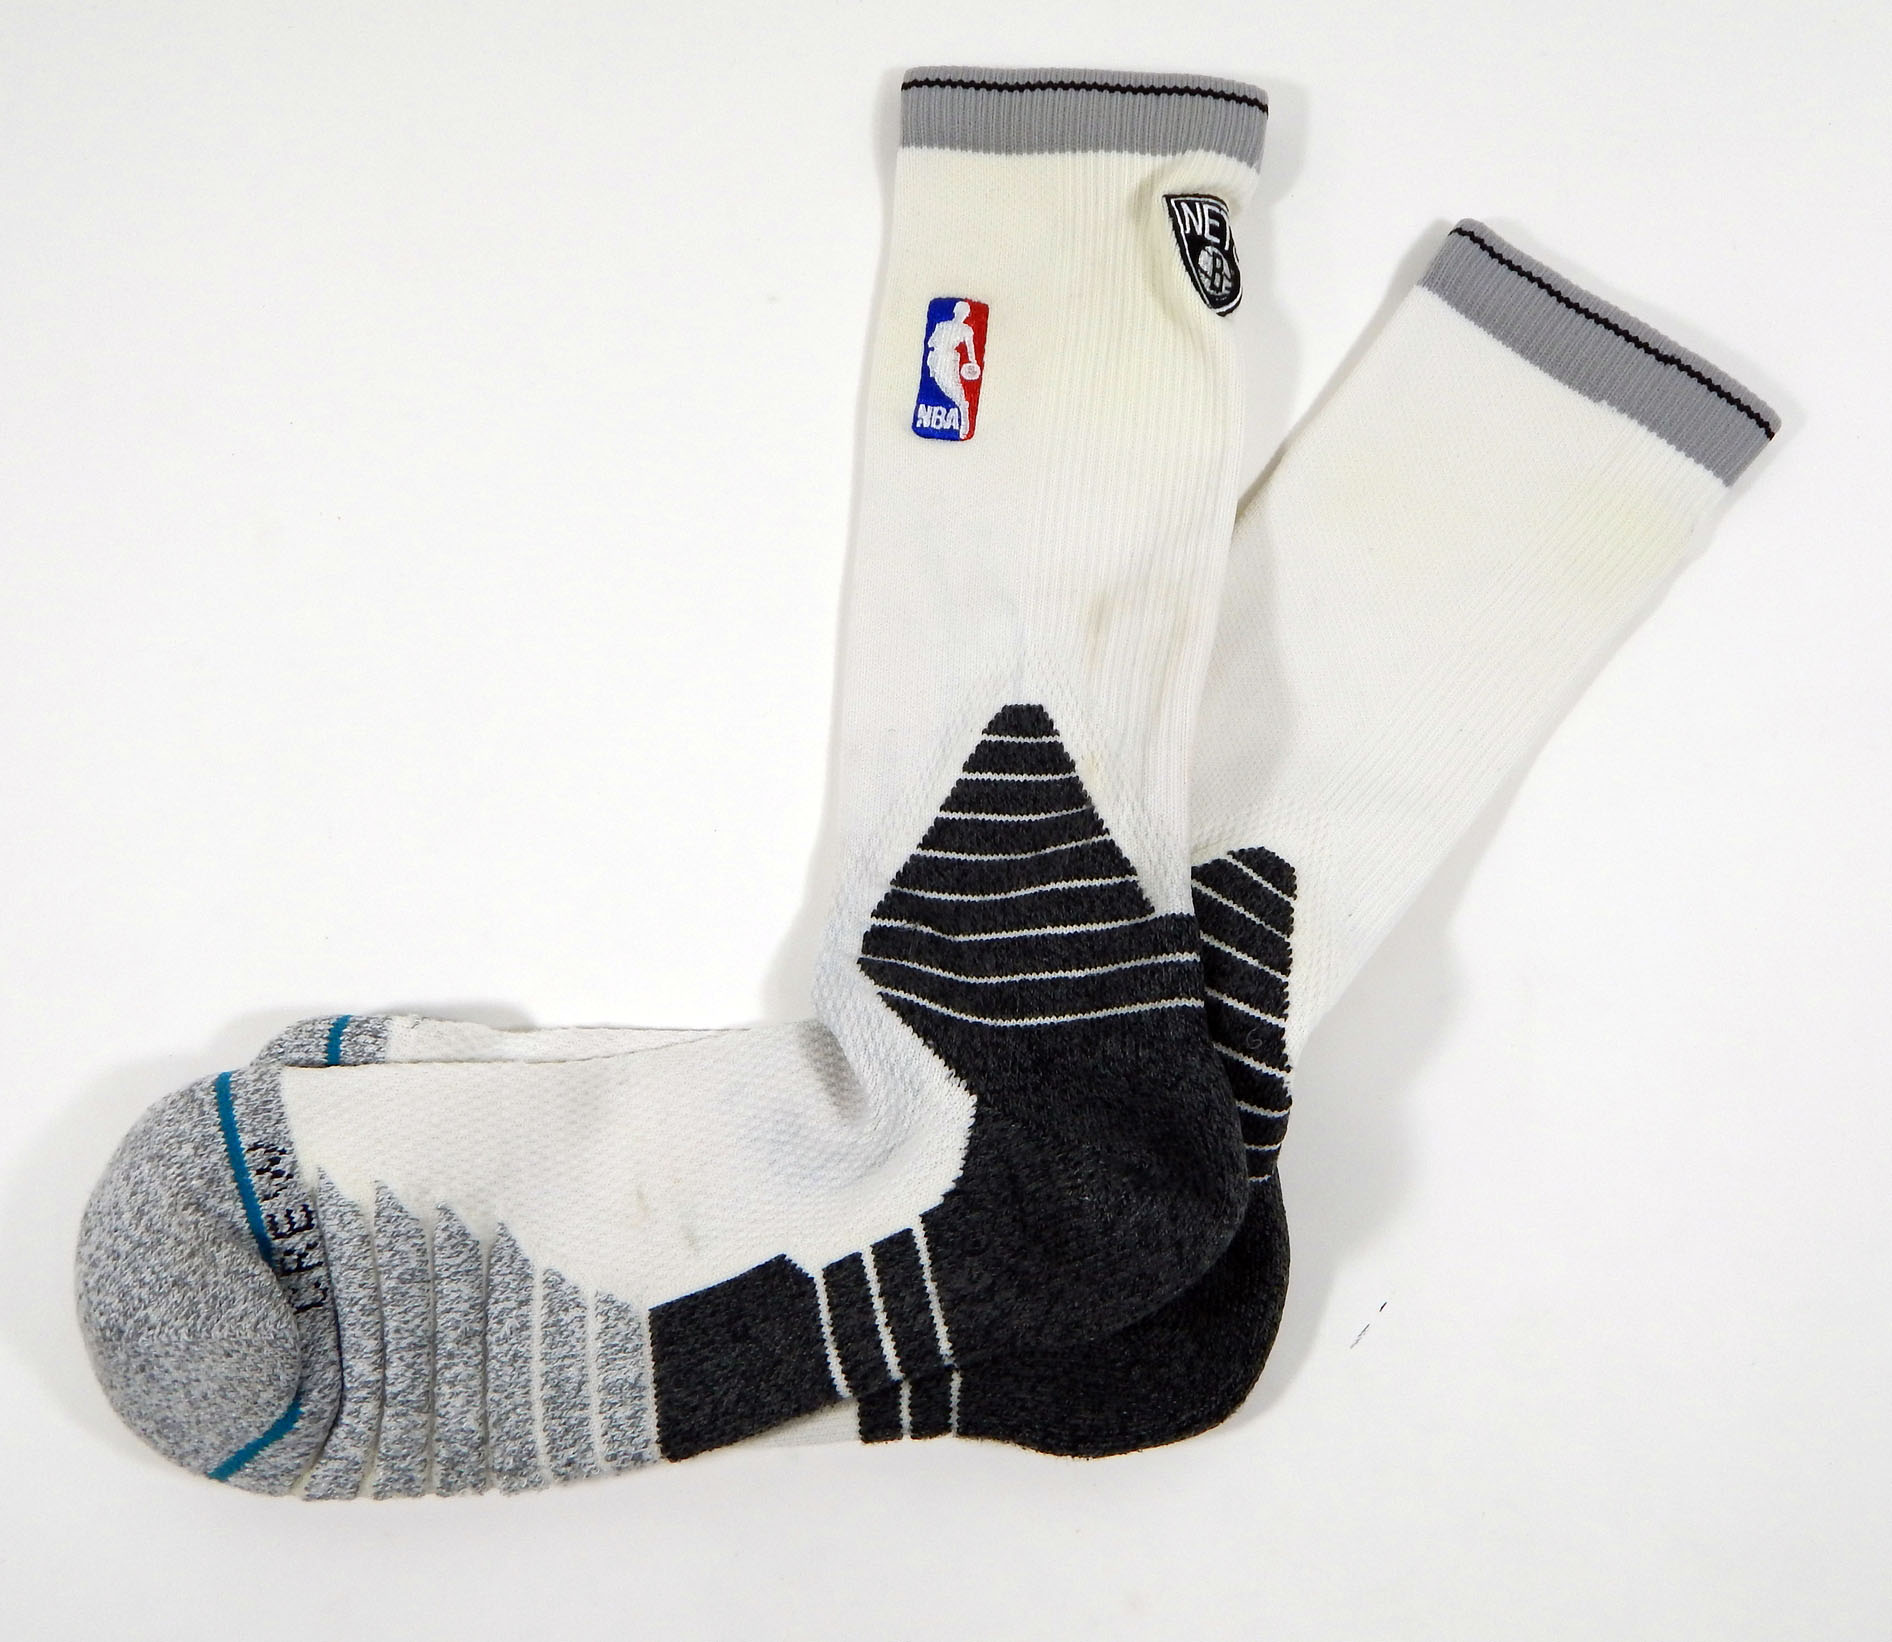 2015-16 Brooklyn Nets # Team Issued White Black Grey Socks DP03451 | eBay